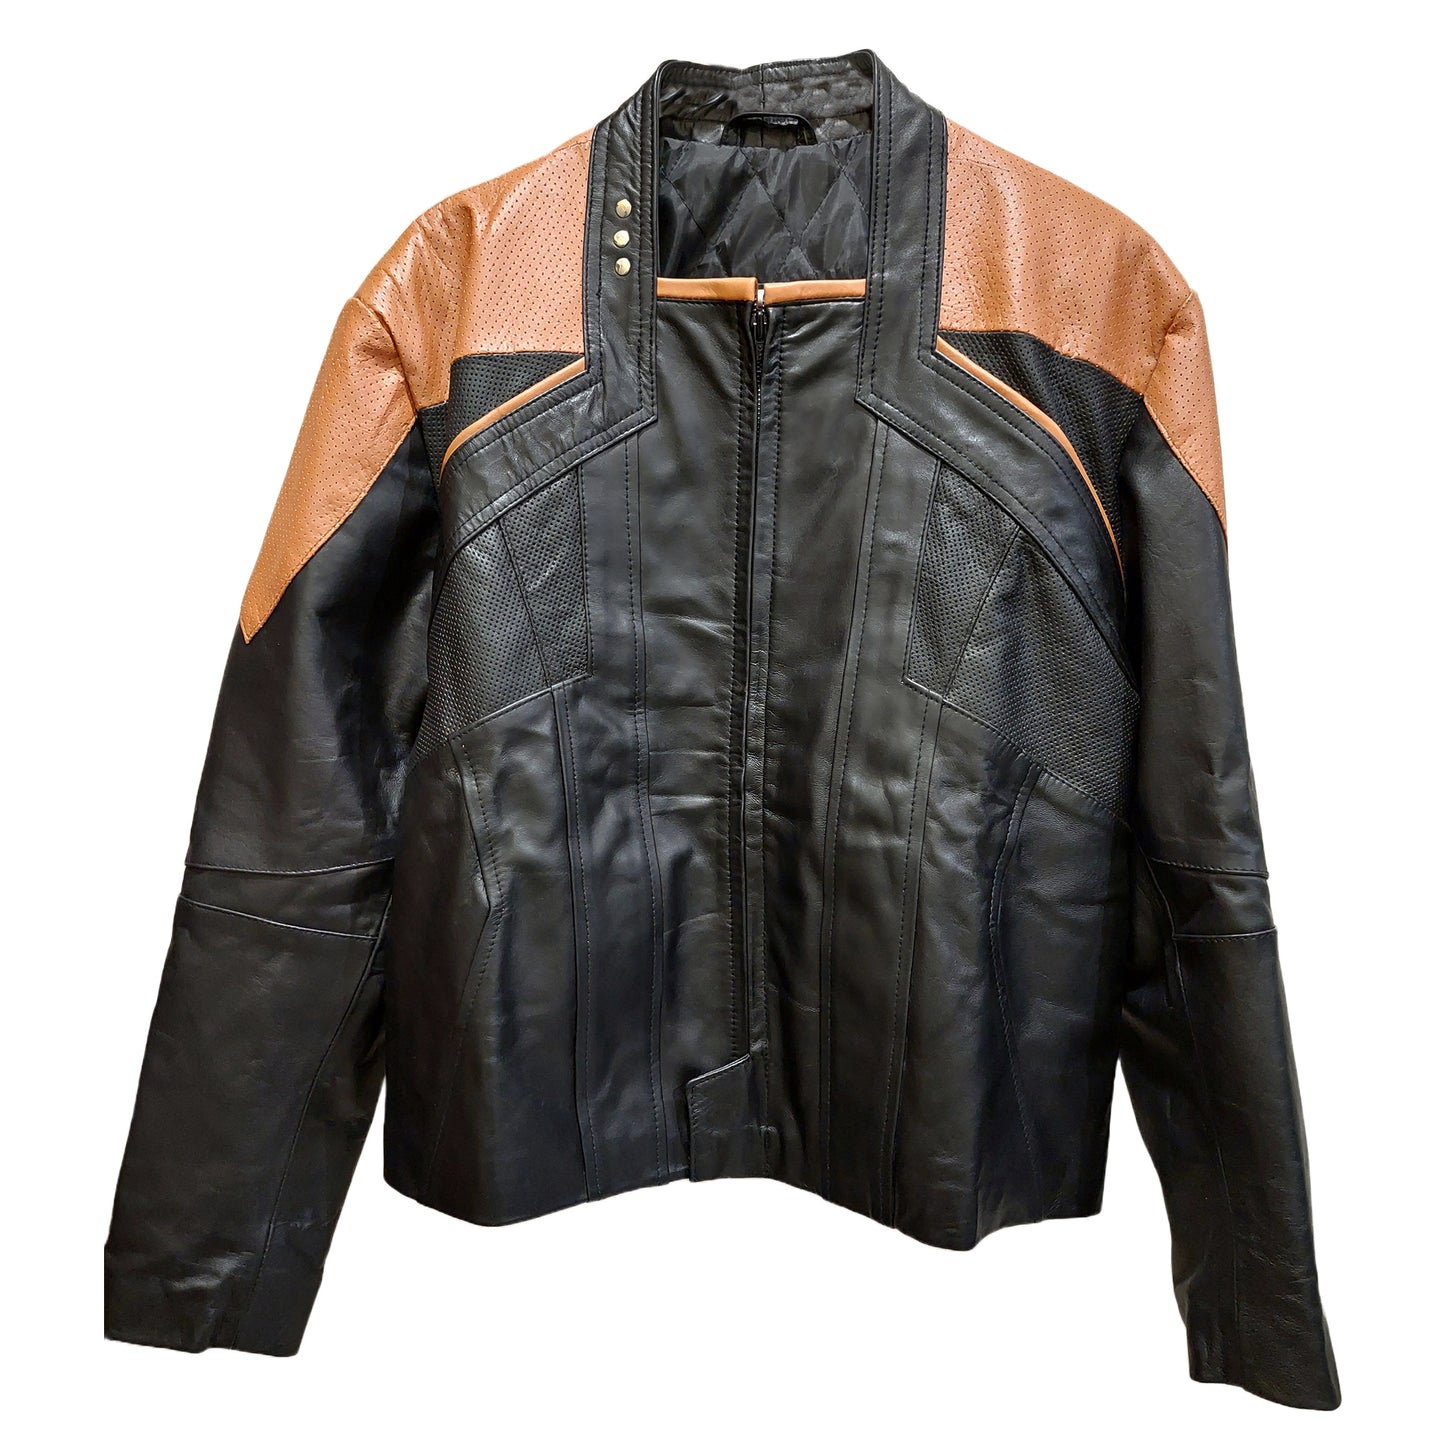 Star Trek Picard Jacket Raffi Musiker Cosplay Real Leather Tan Perforated Jacket